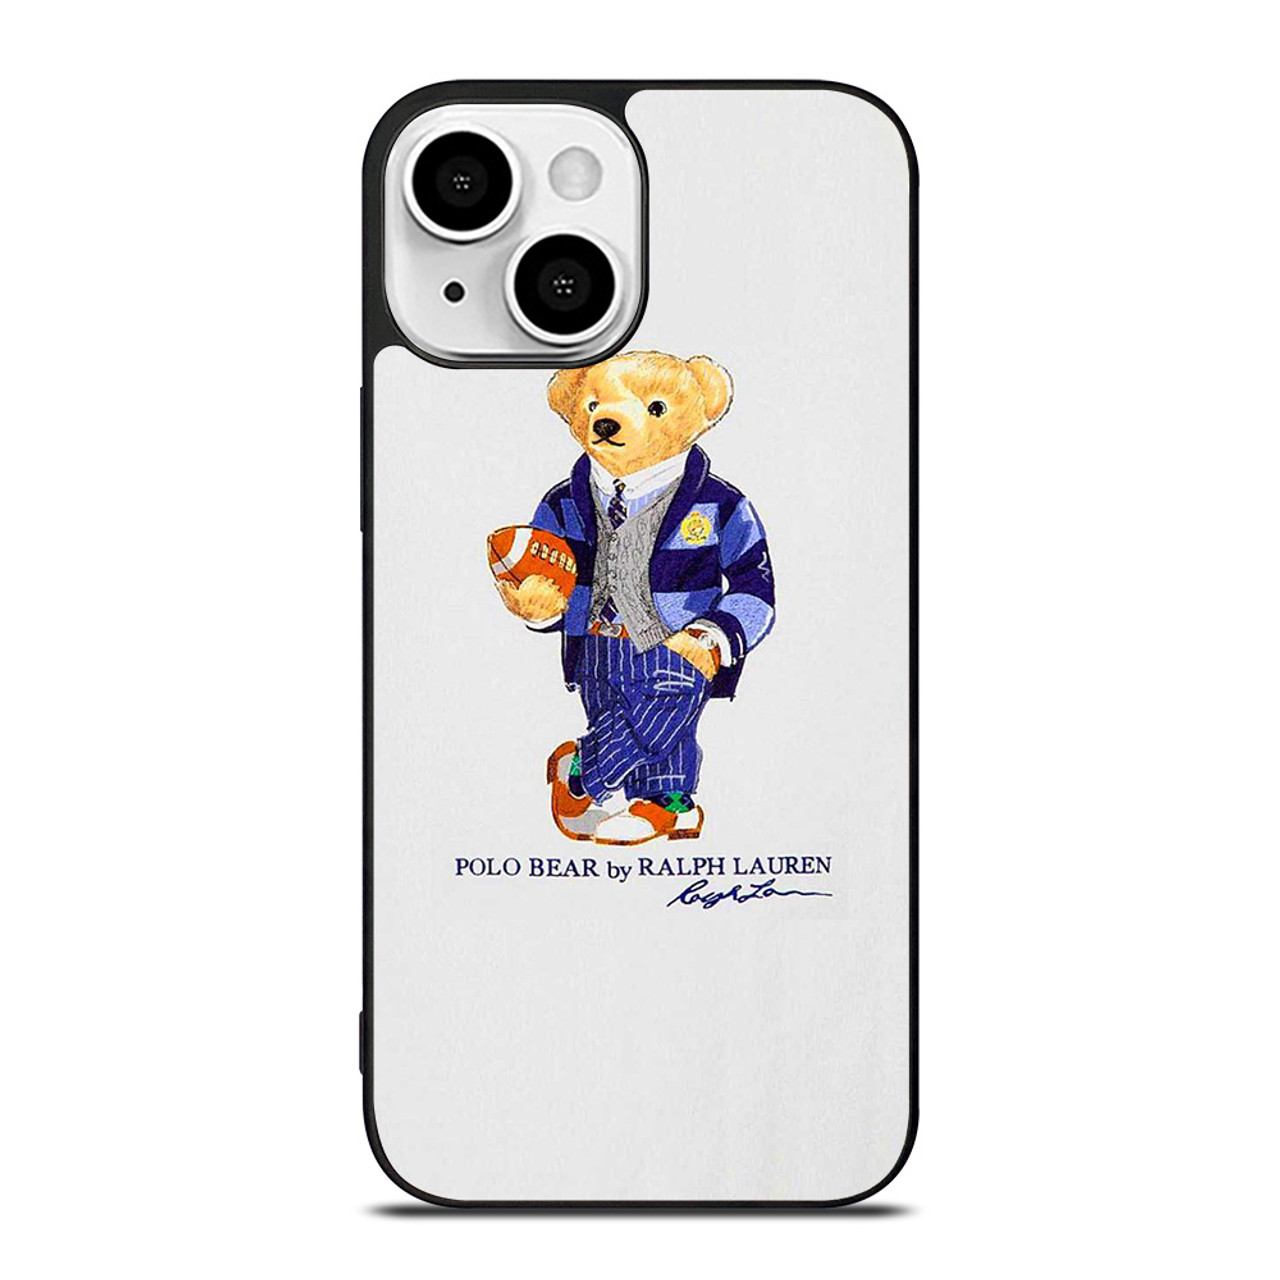 POLO BEAR RALPH LAUREN 1 iPhone 13 Mini Case Cover